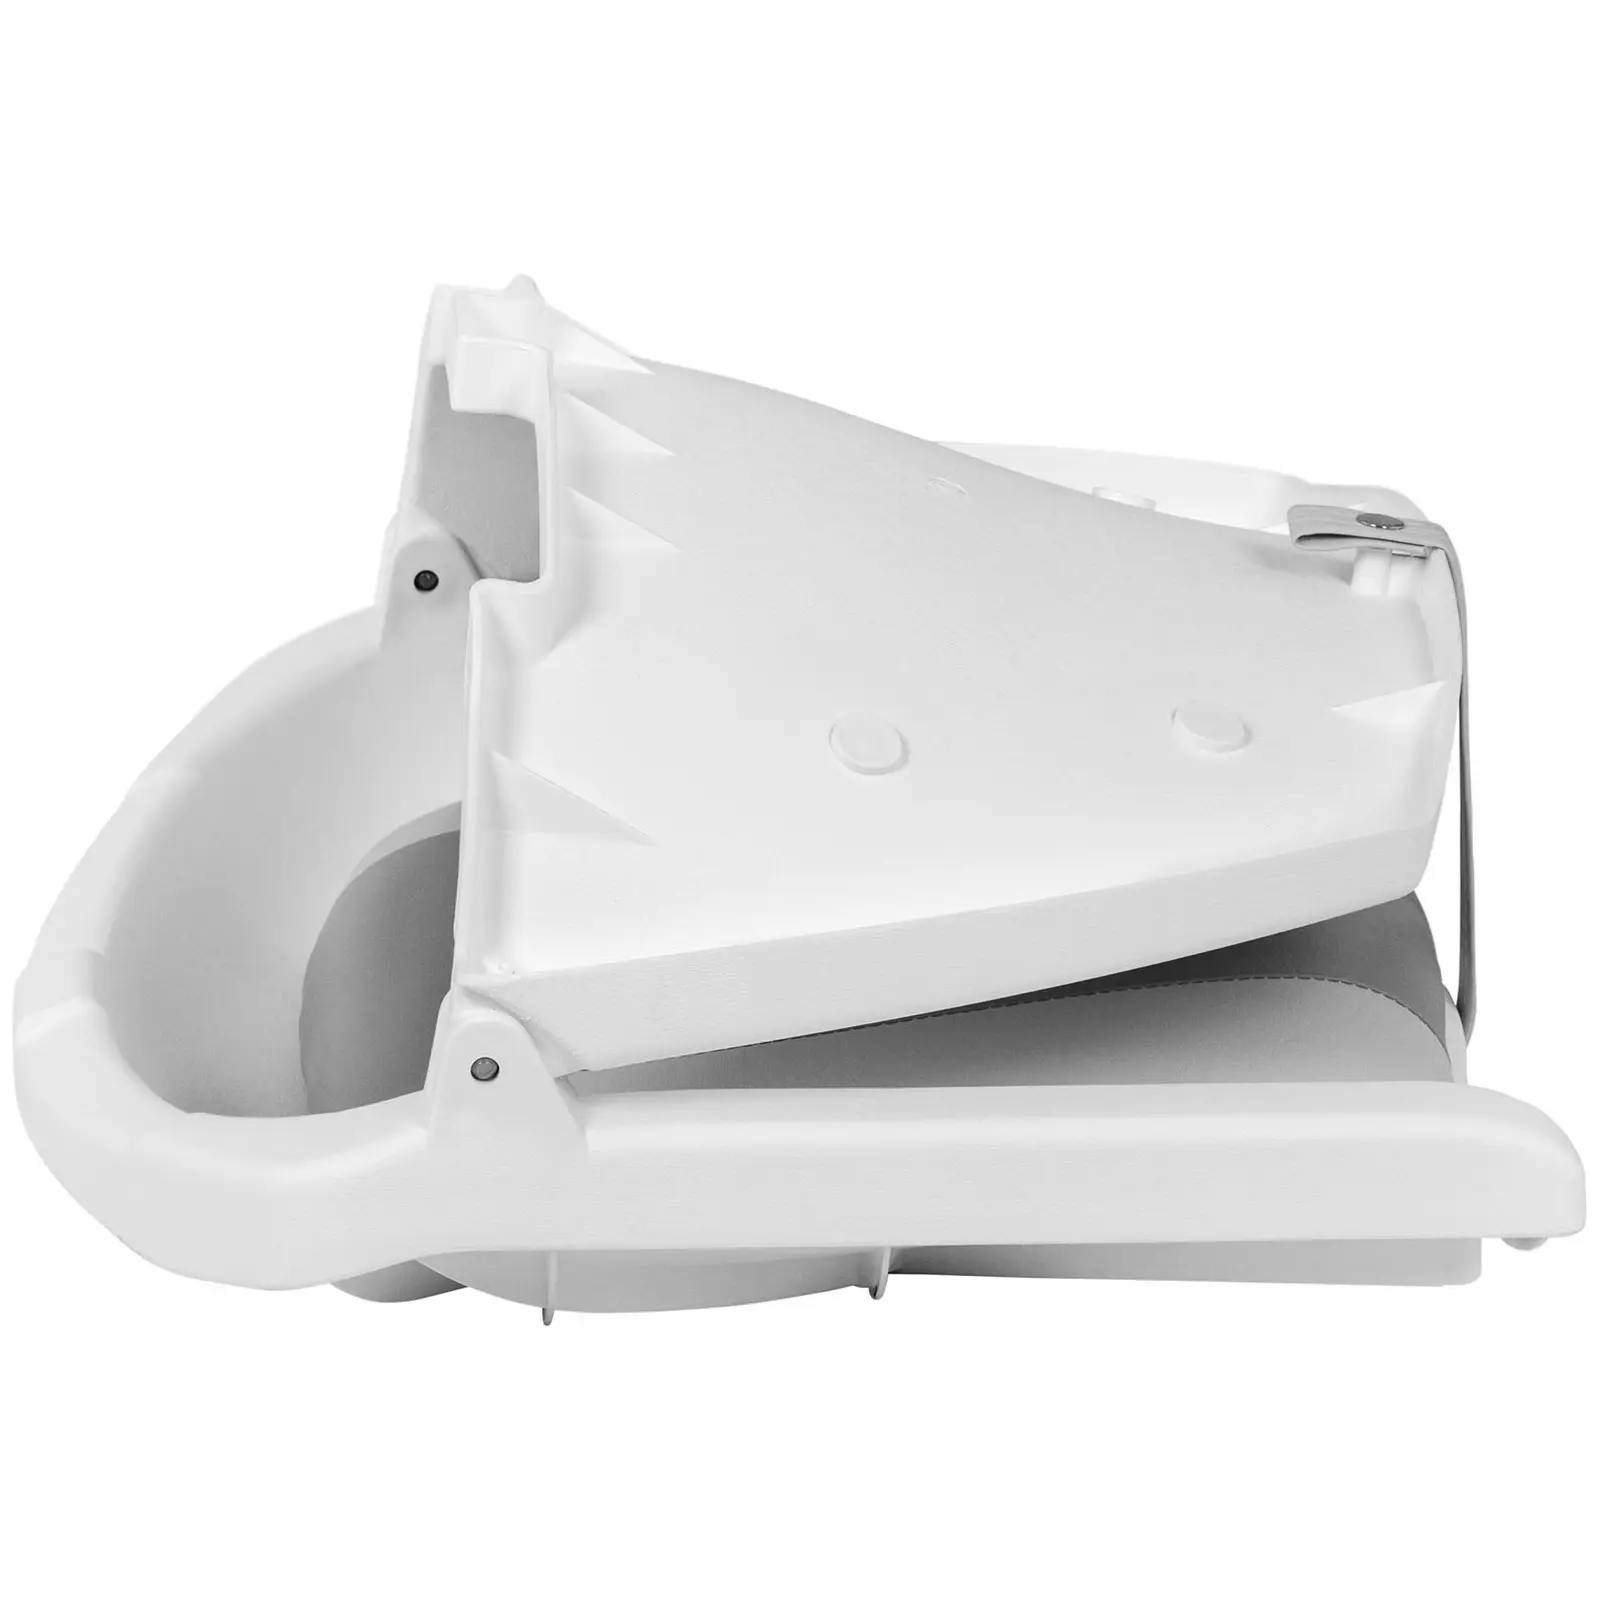 Bootssitz - 52 x 56 x 31,5 cm - Light grey, White